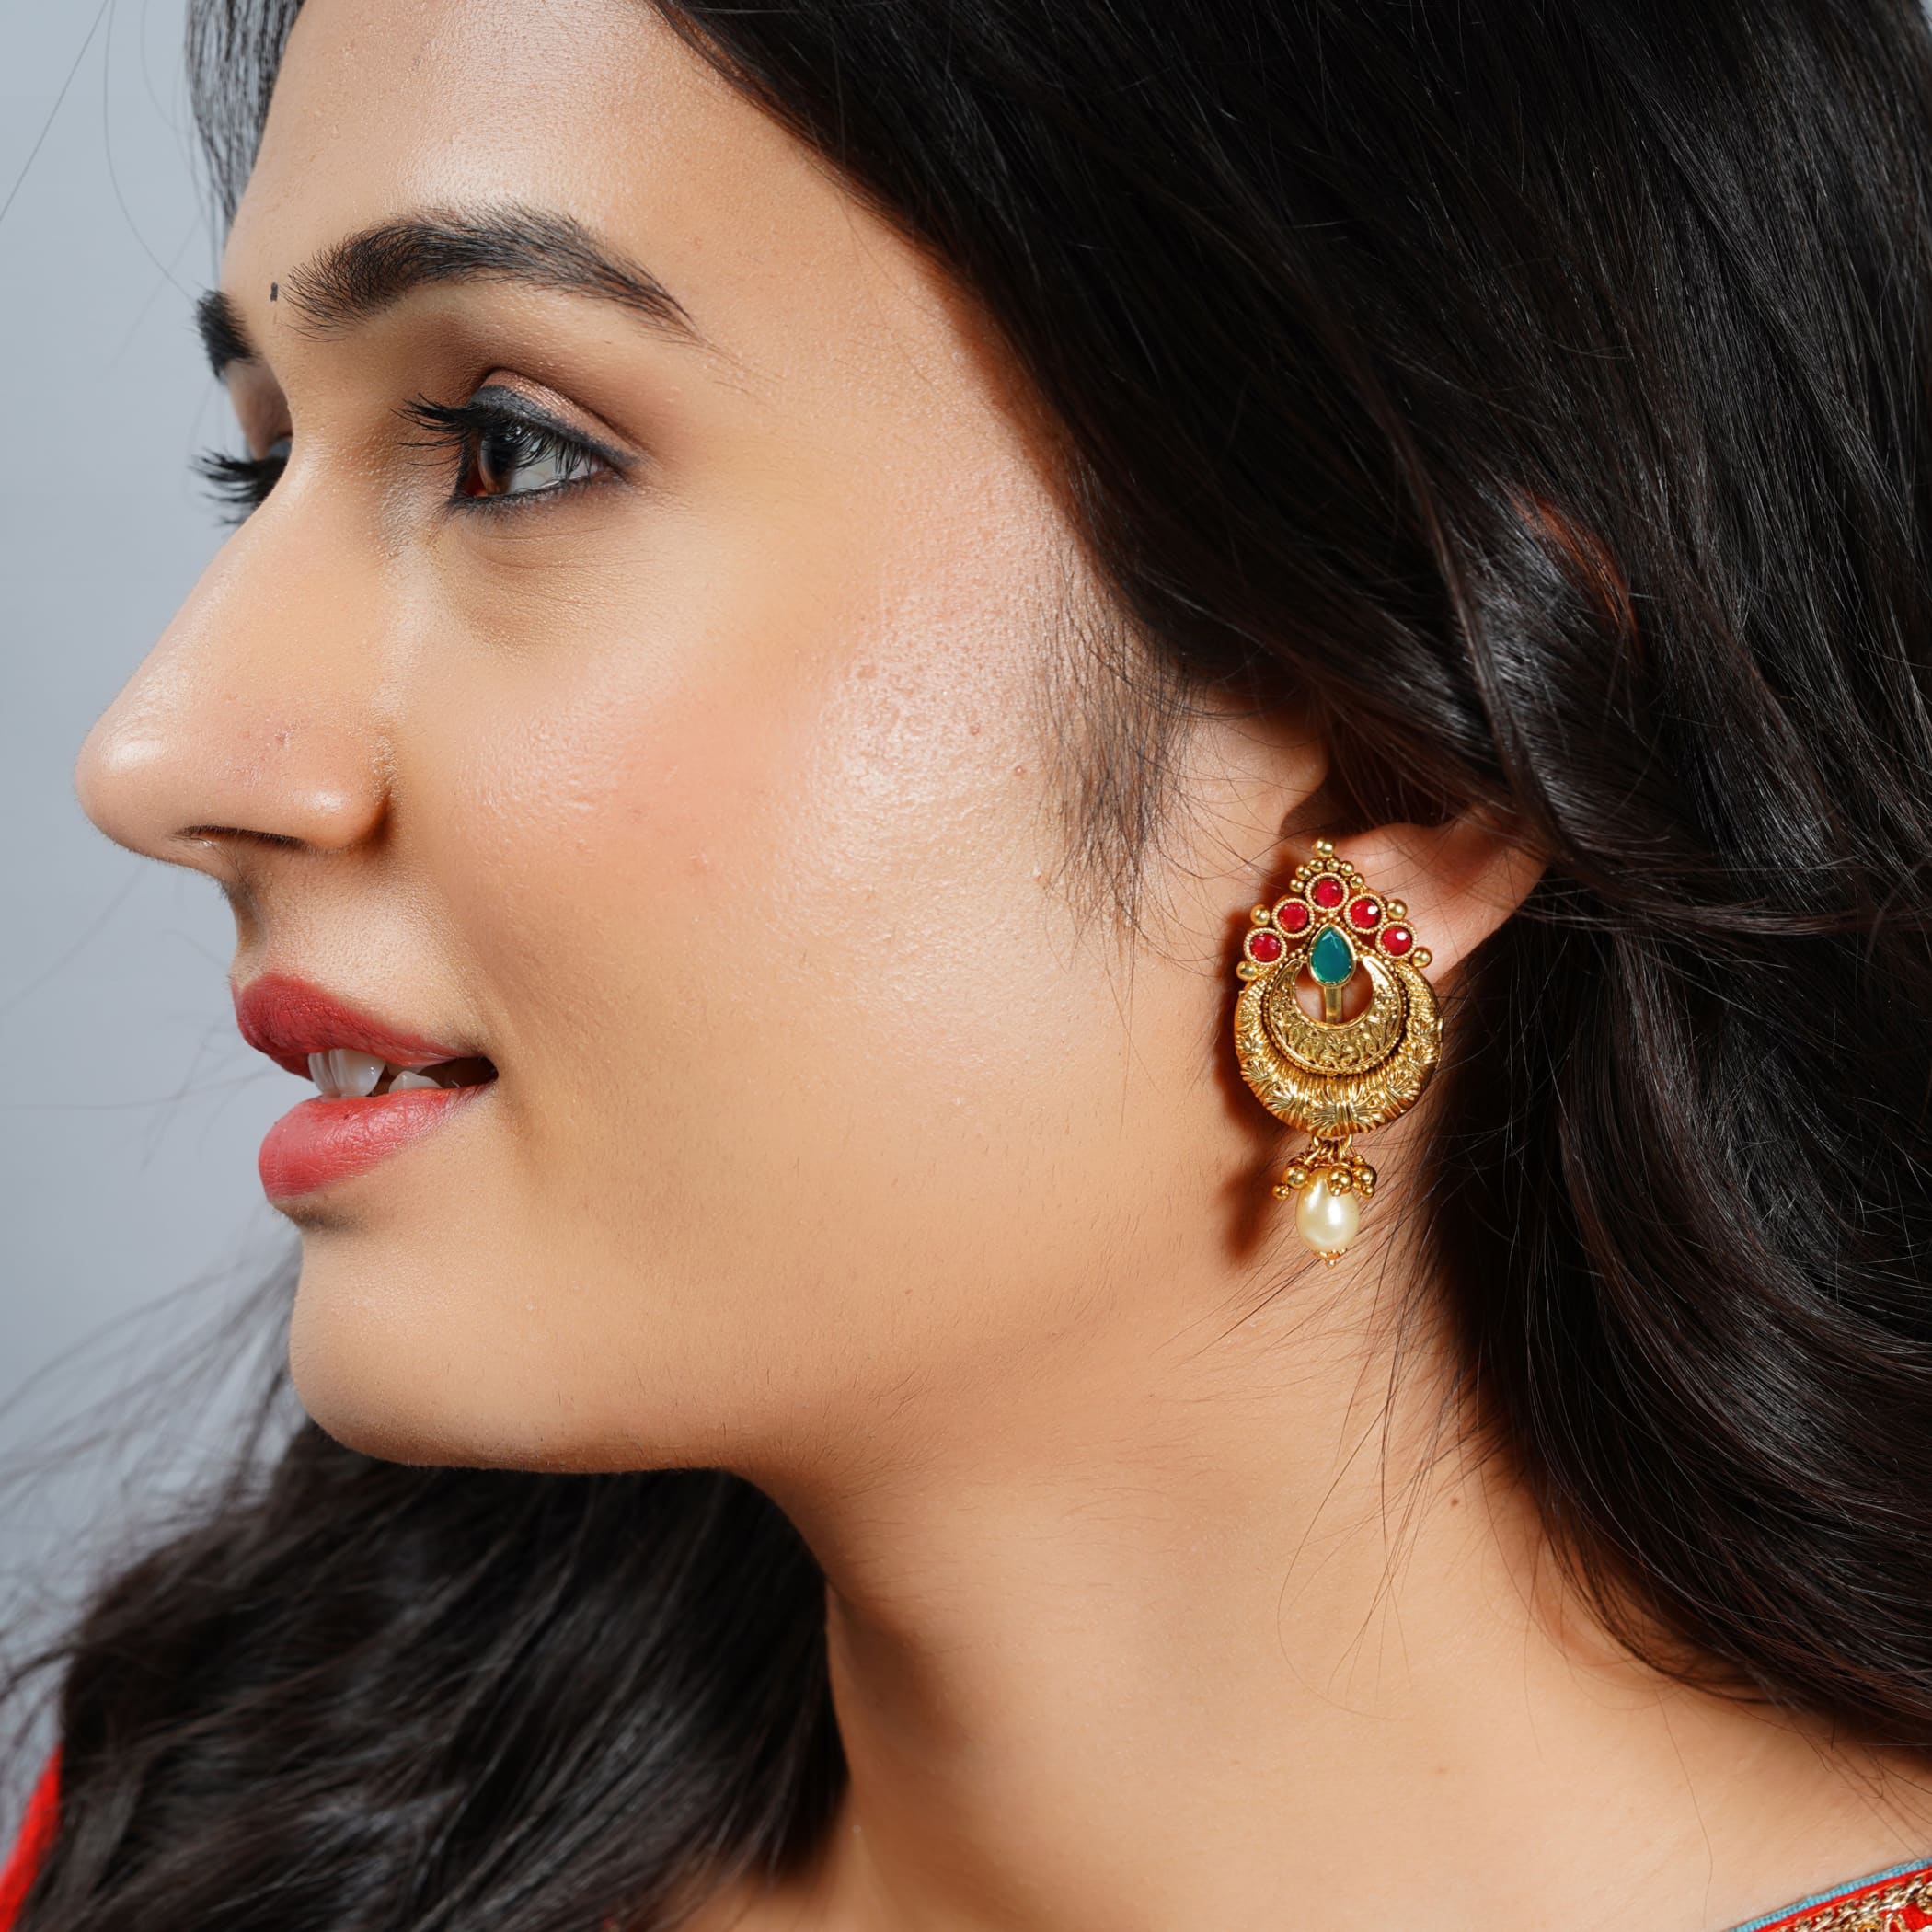 Golden Zinc Alloy Ear Cuff South Indian Jhumkas at Rs 180/pair in Mumbai |  ID: 2852379072612